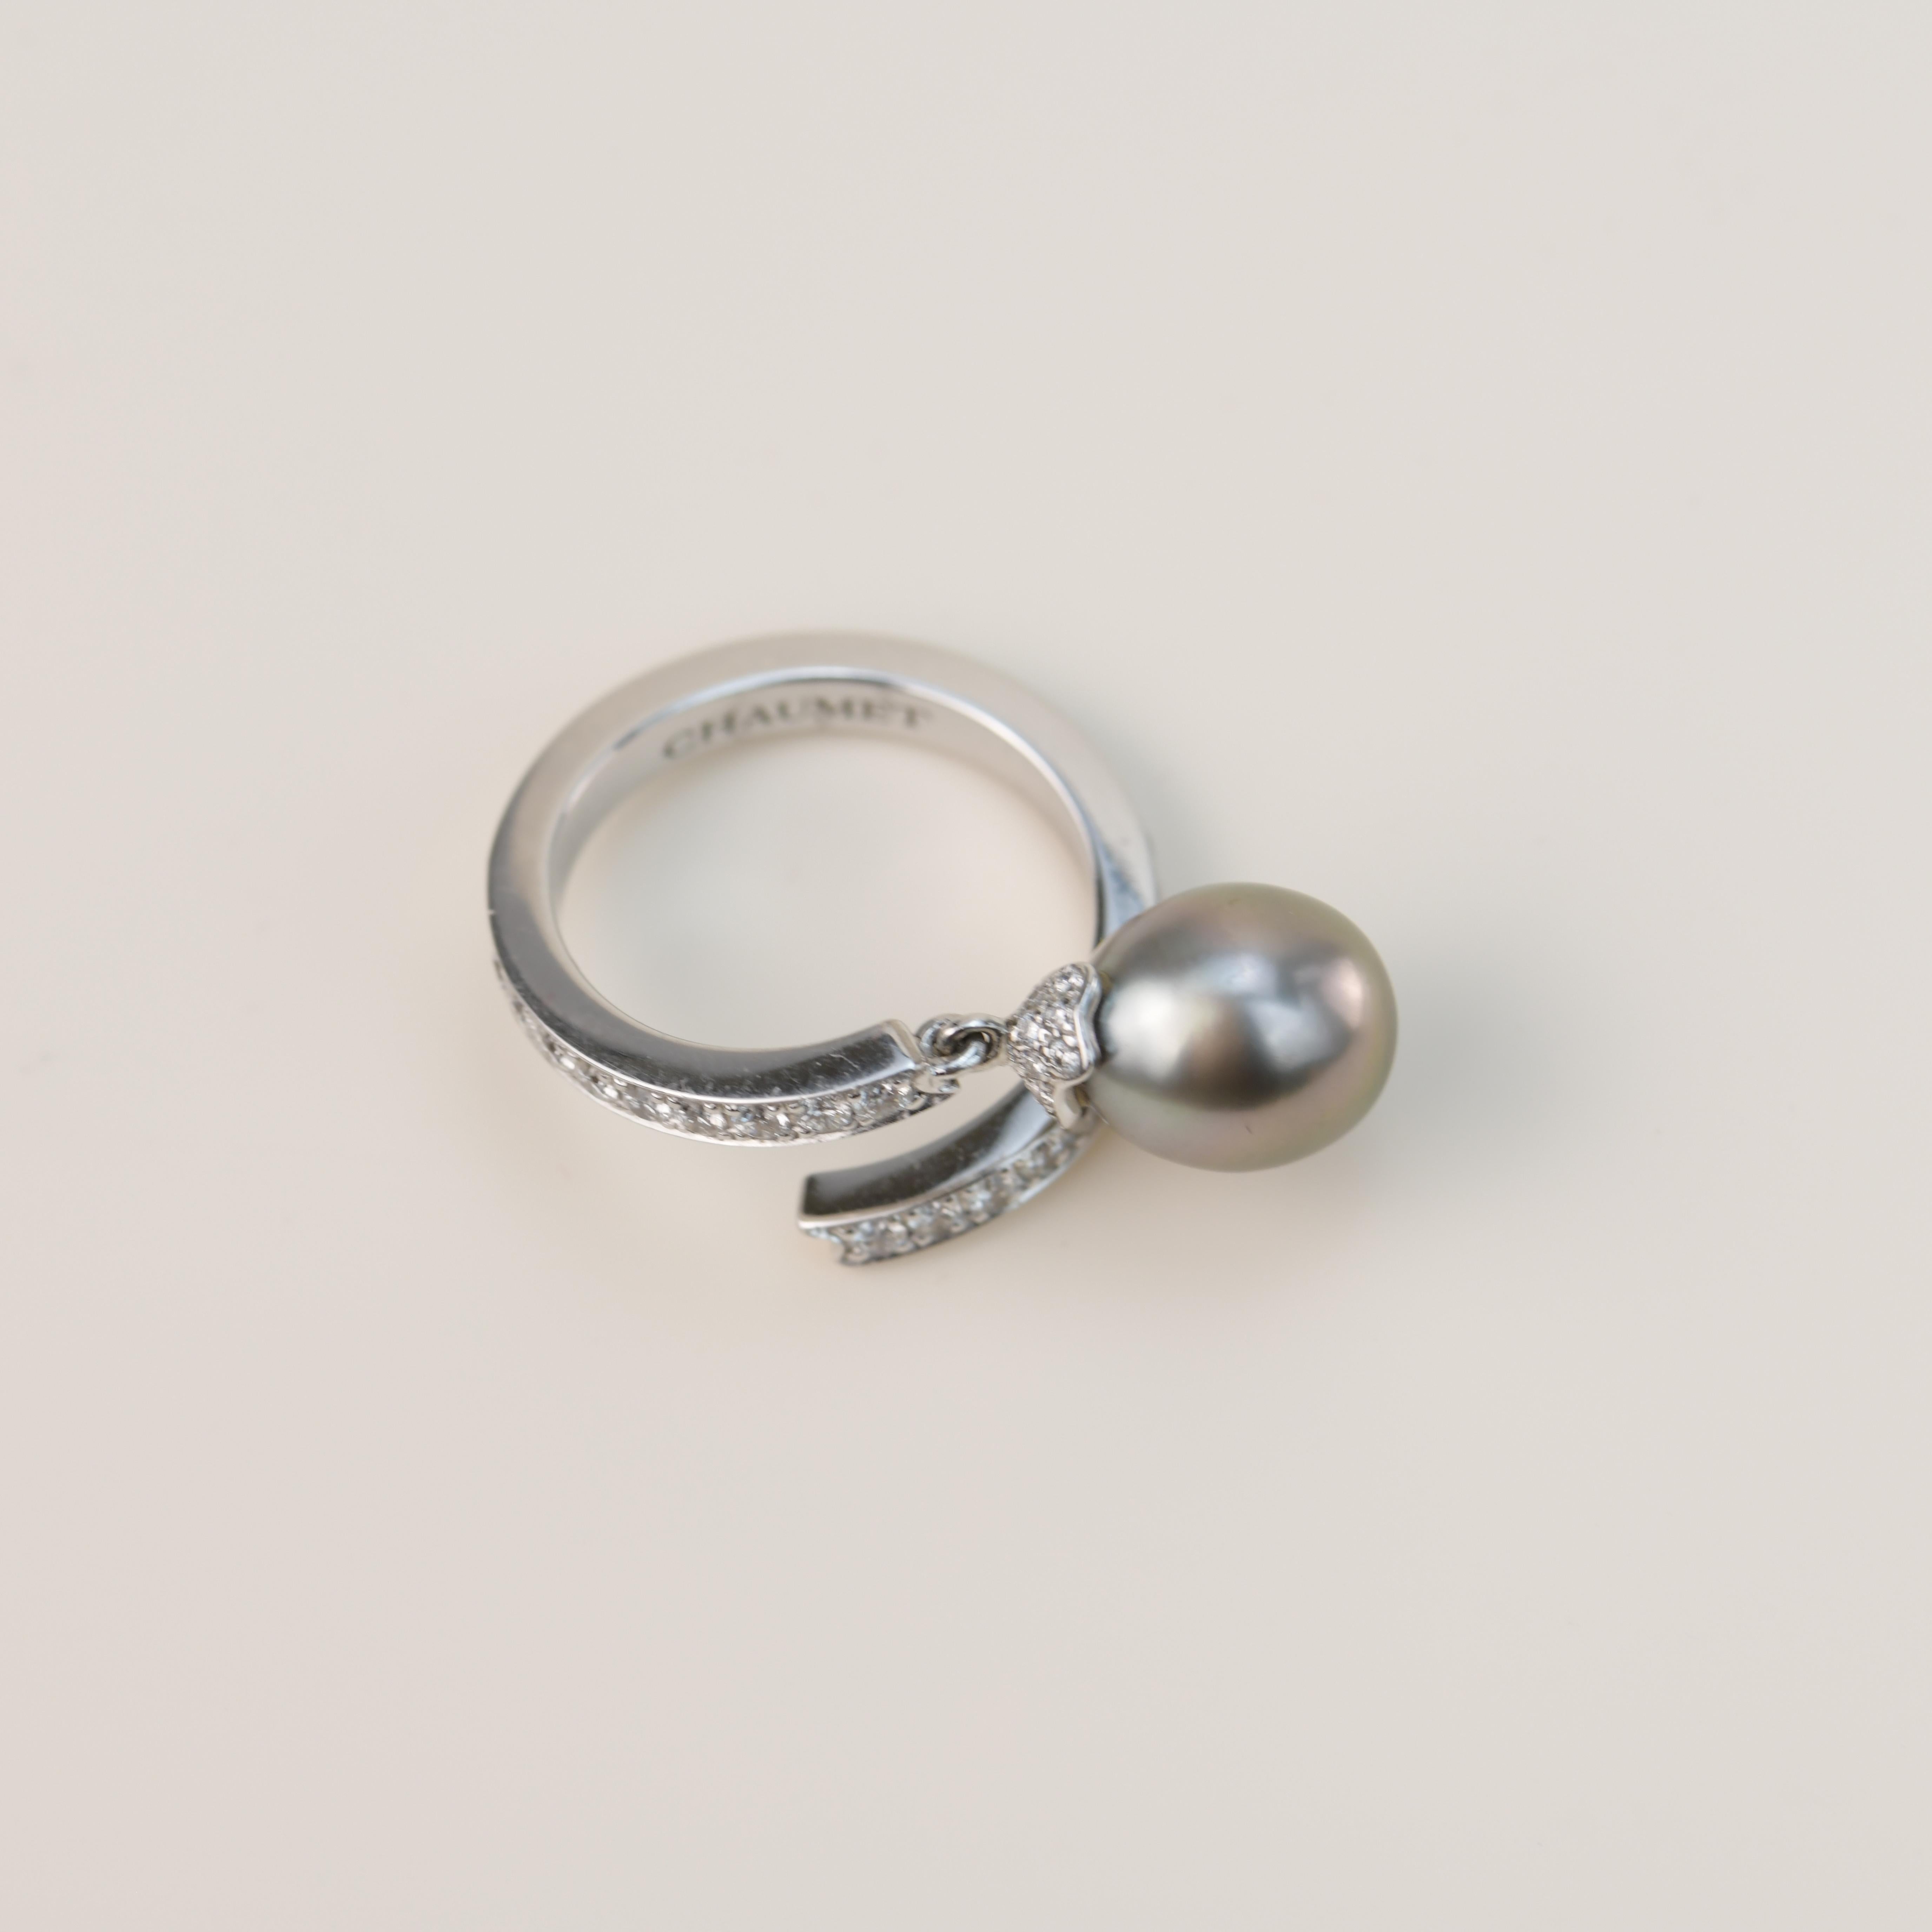 Chaumet 18k White Gold Black Pearl Diamond Ring 1